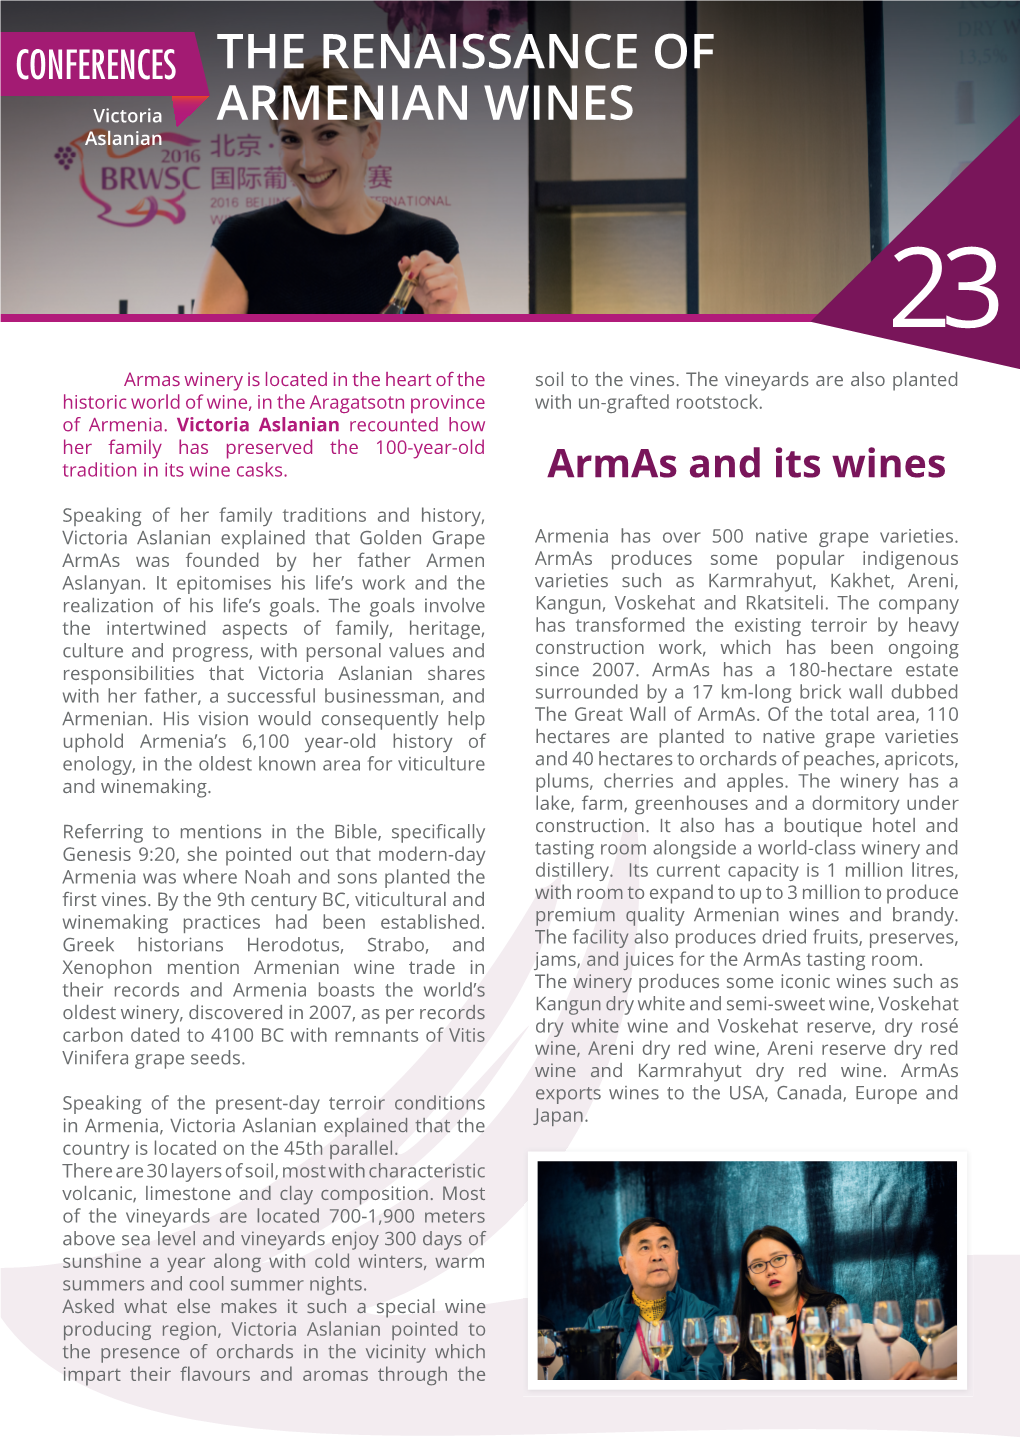 The Renaissance of Armenian Wines